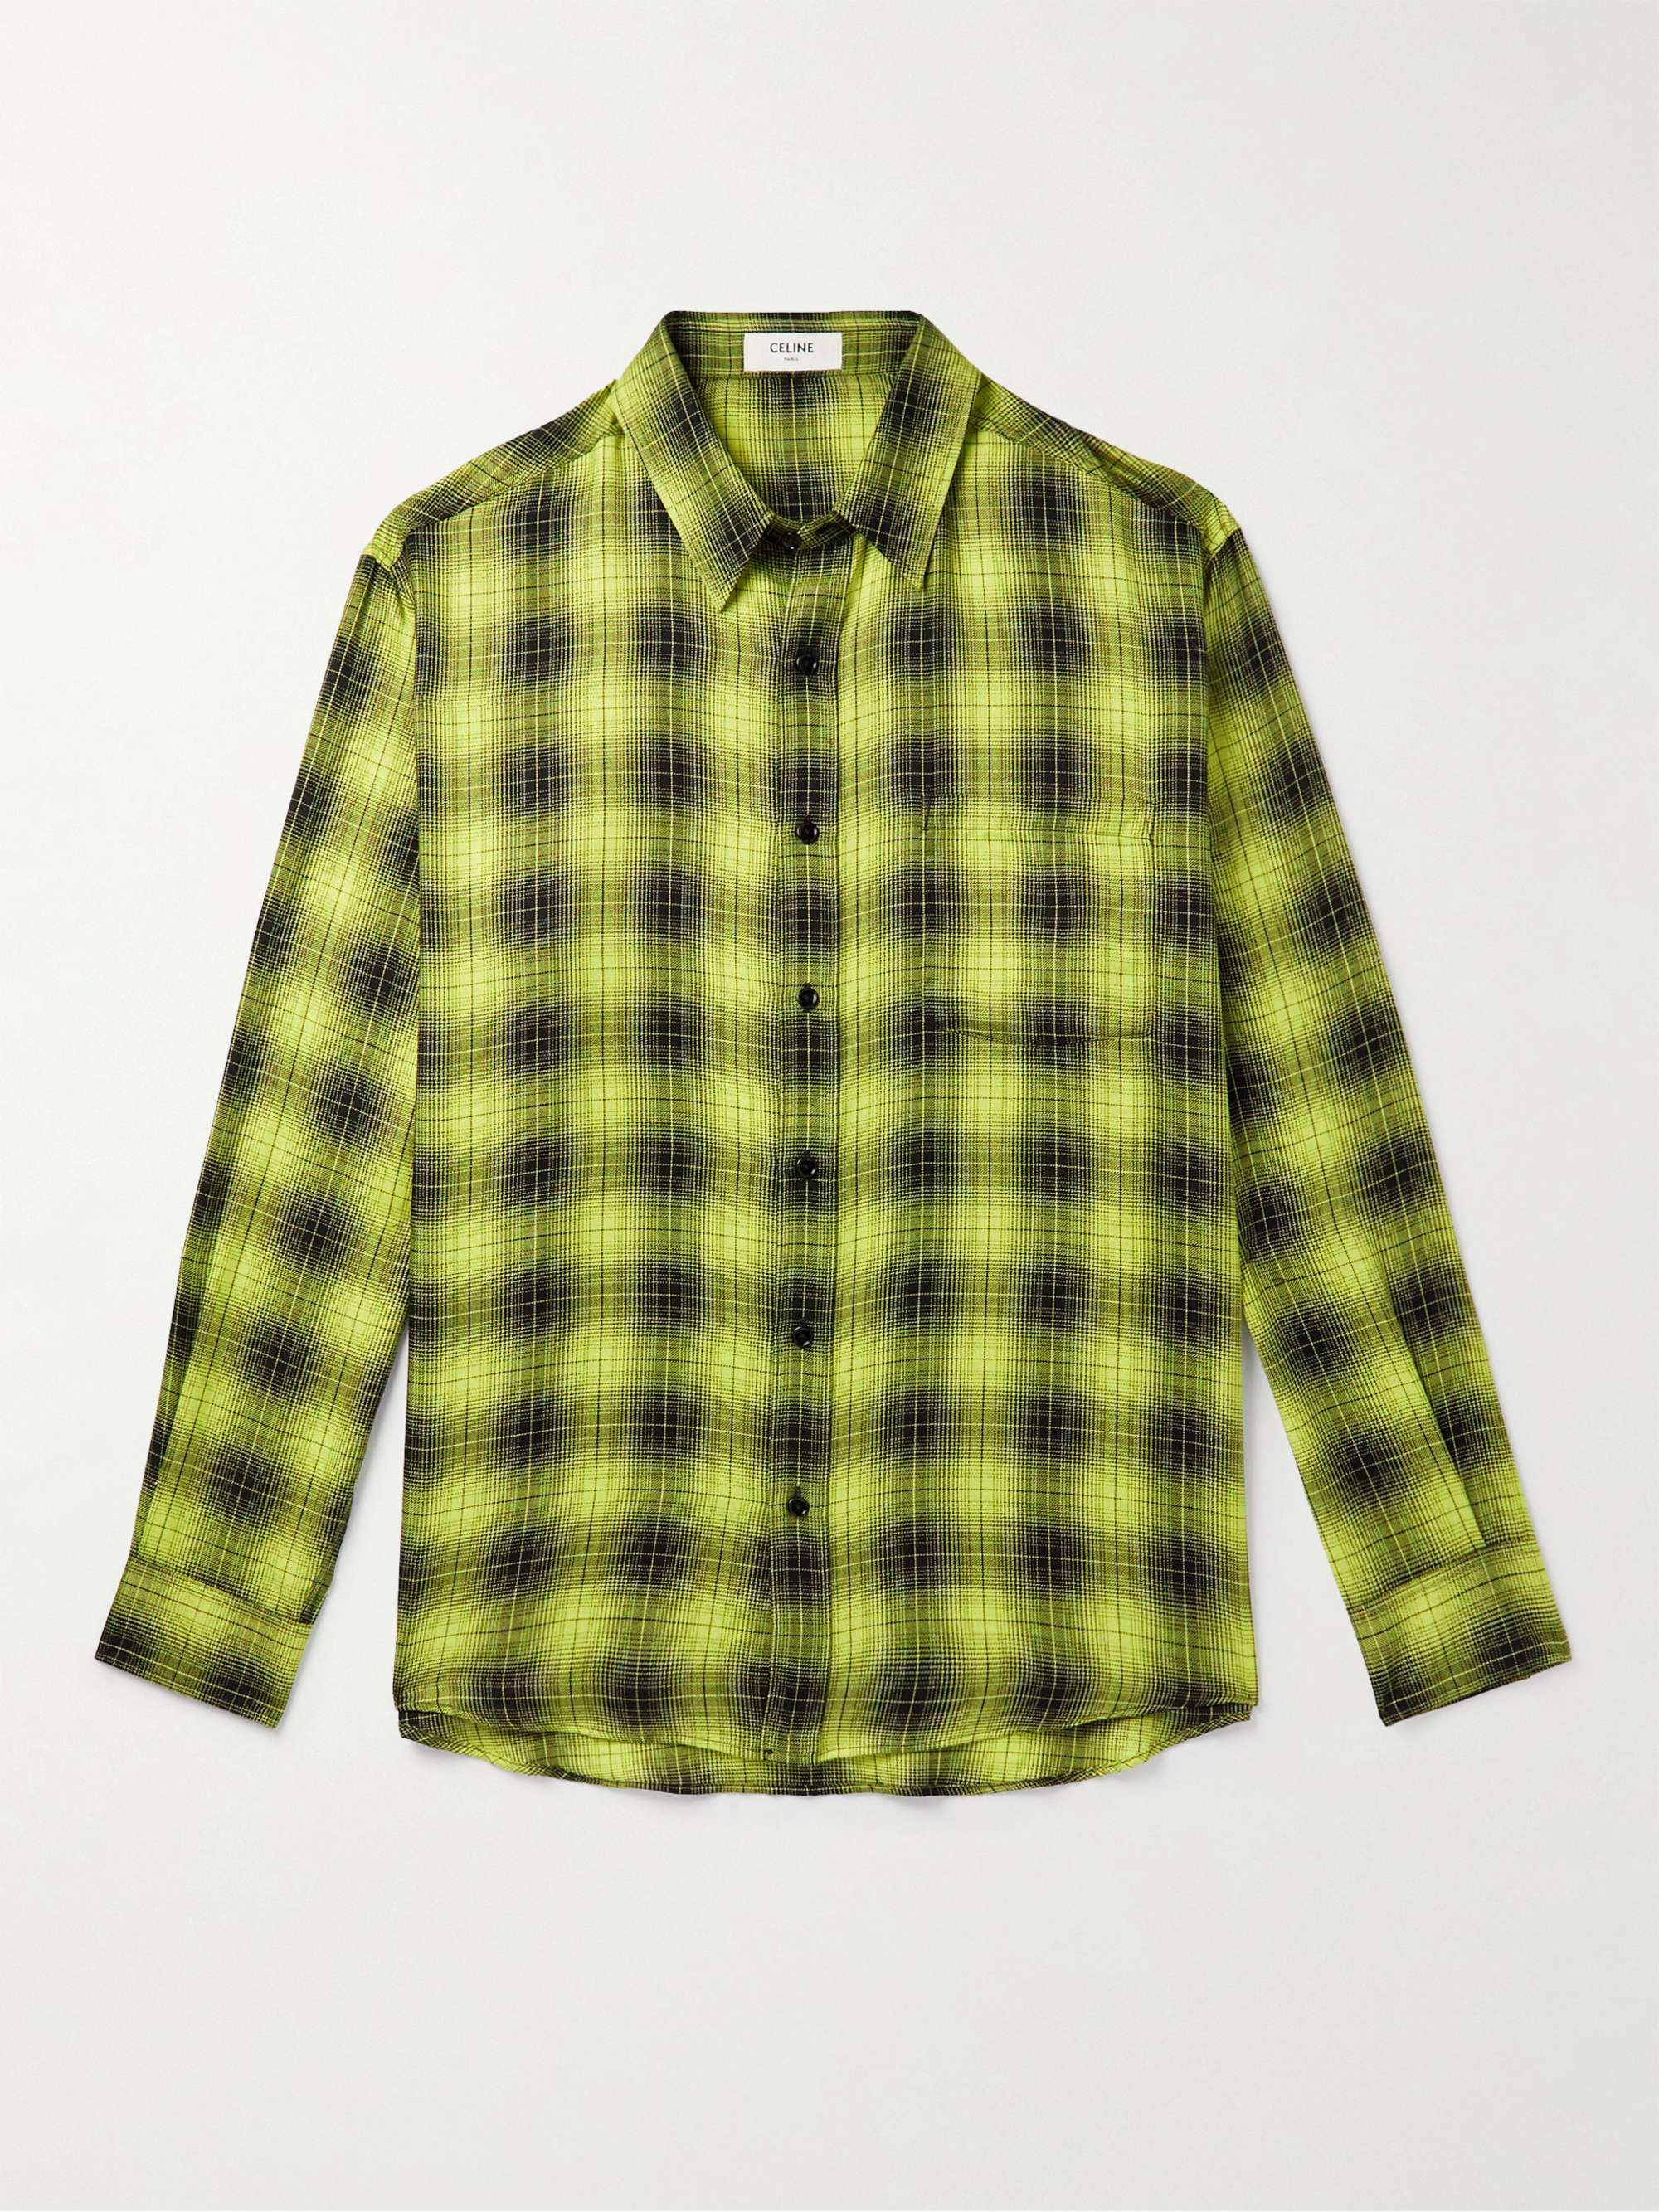 CELINE HOMME Checked Cotton-Flannel Shirt | MR PORTER